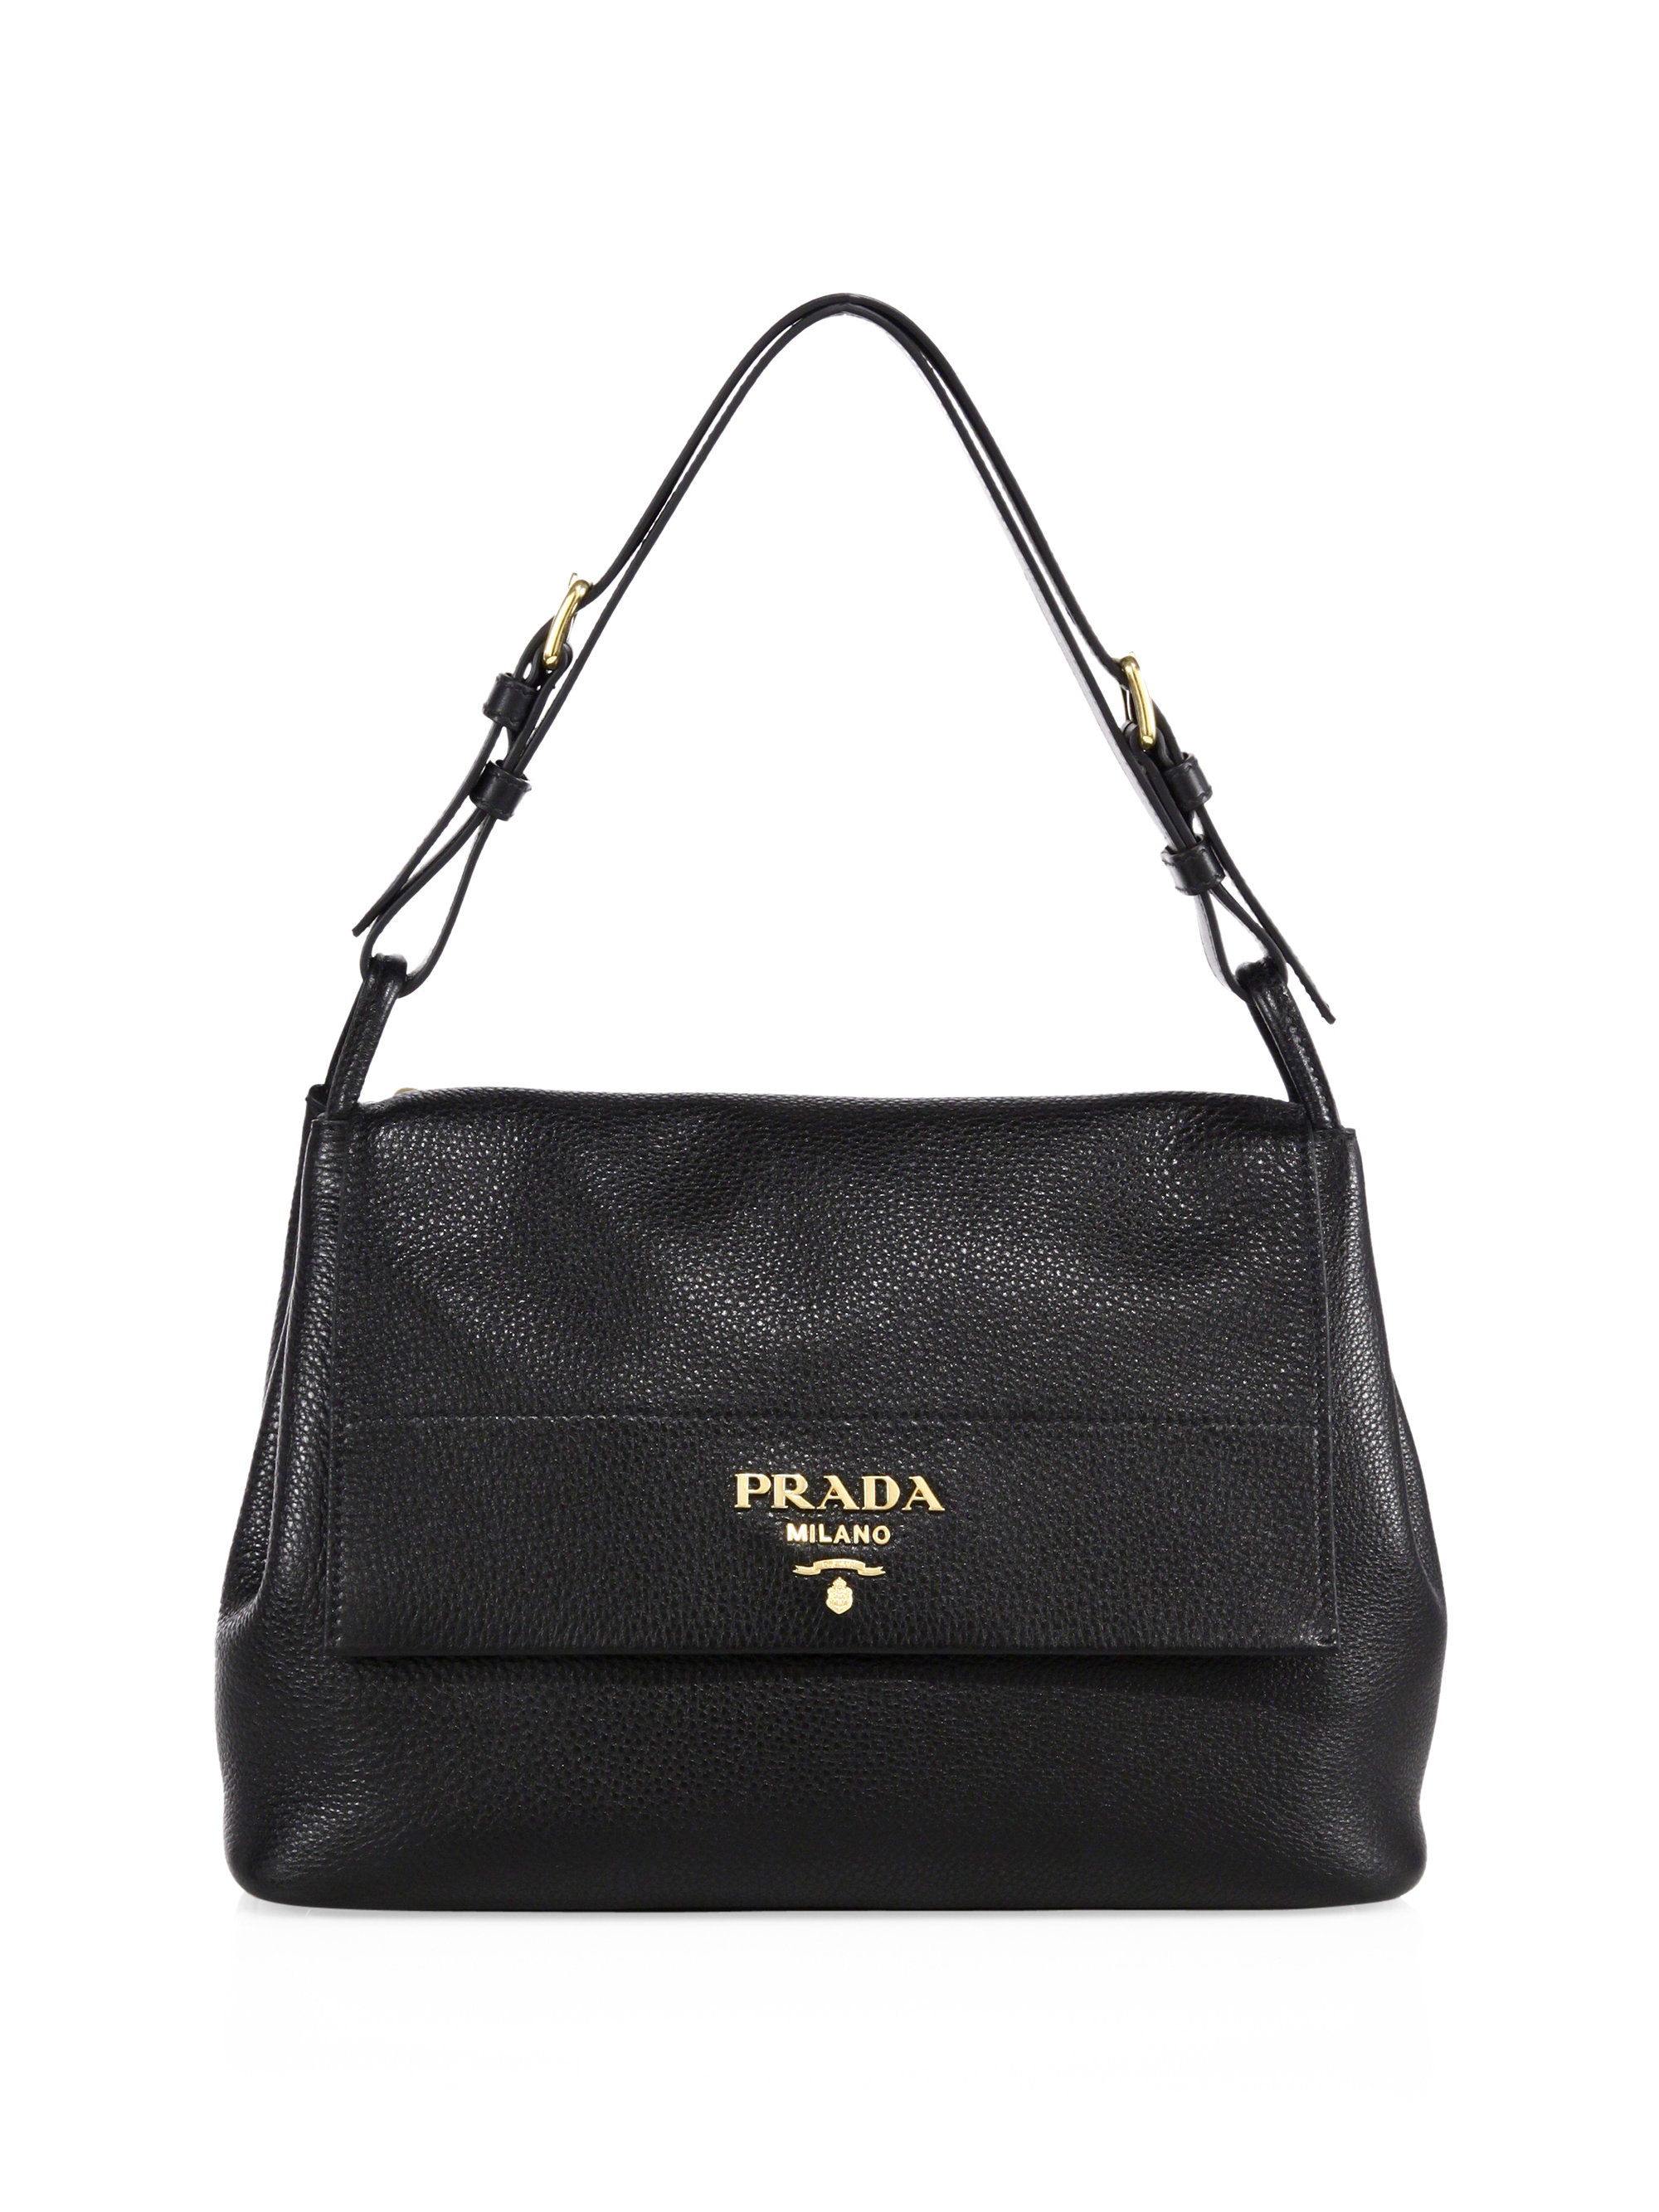 Prada Daino Leather Flap Shoulder Bag in Black | Lyst